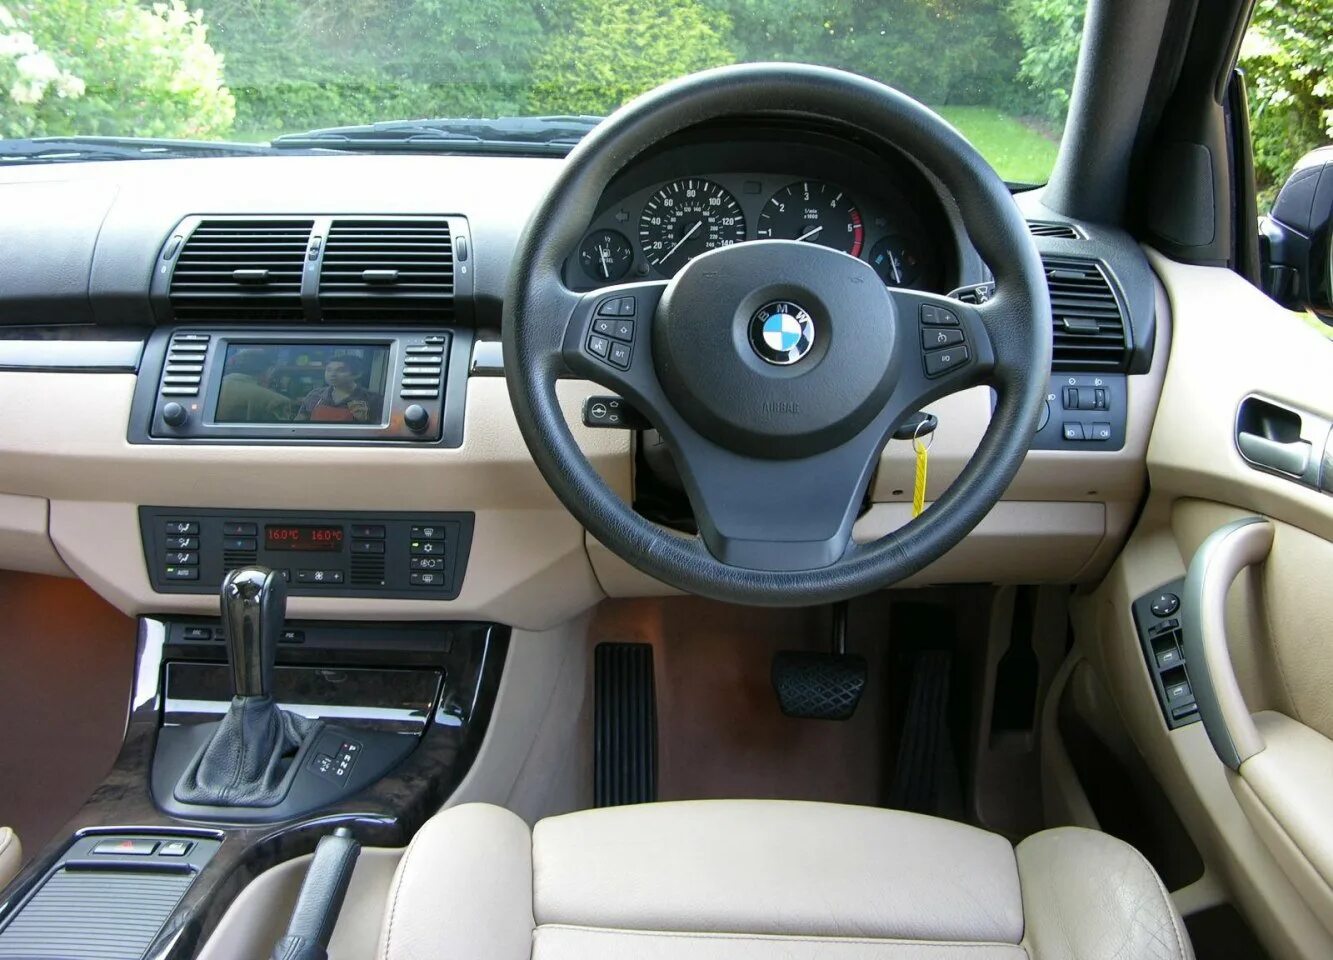 BMW x5 e53 салон. BMW x5 2000 Interior. BMW x5 2005. BMW x5 e53 3.0i салон. Bmw x5 3.0 дизель